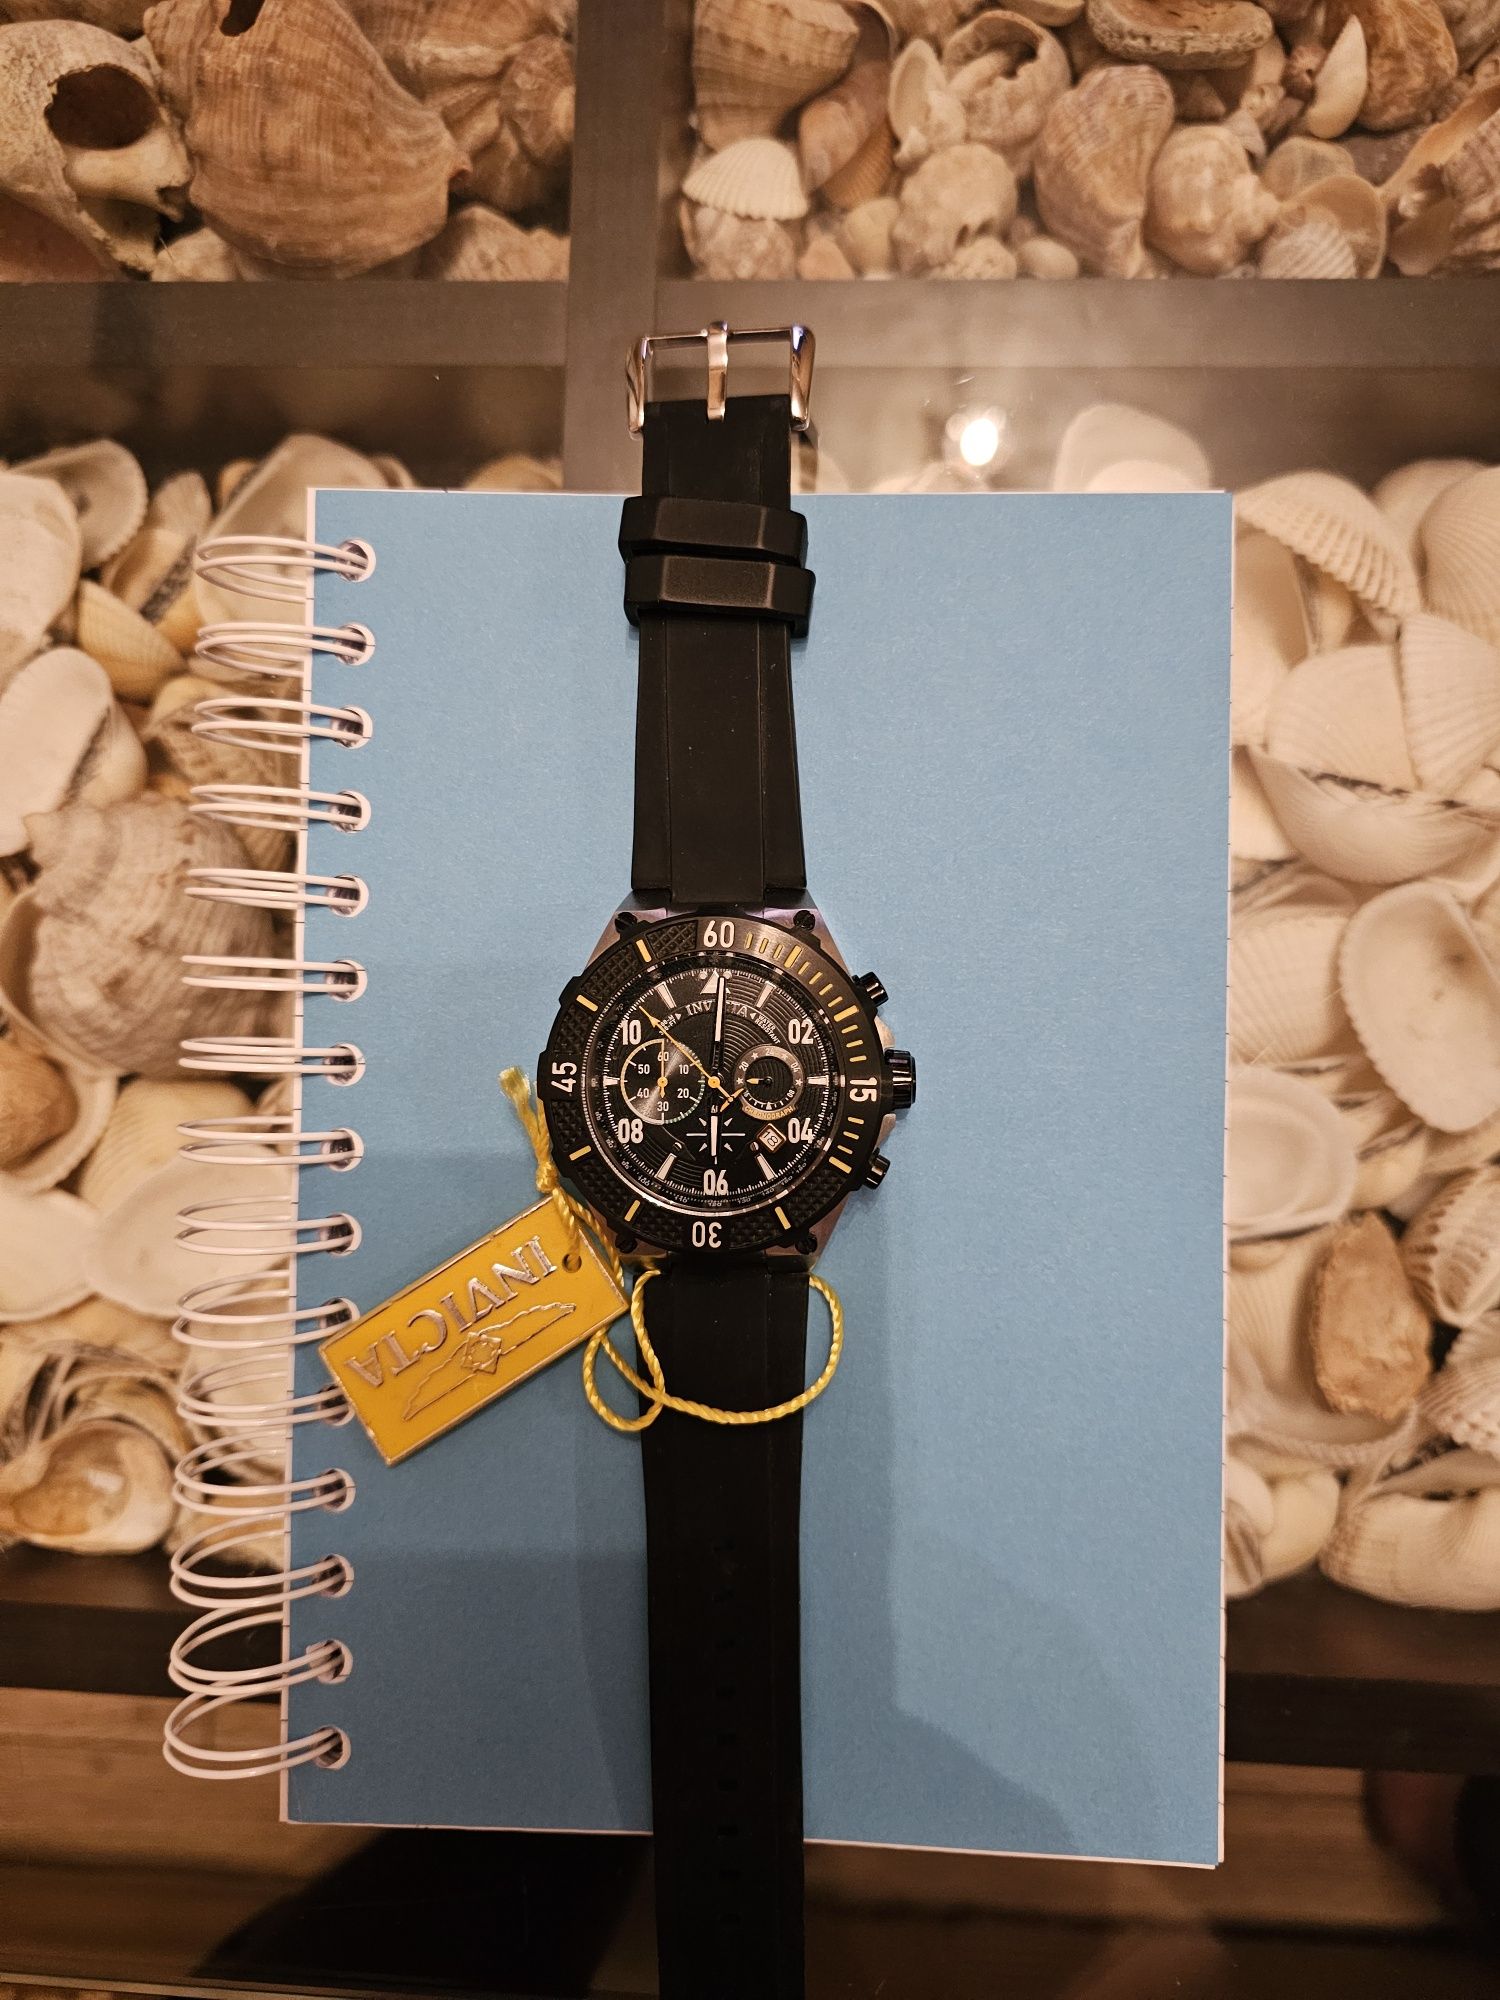 Мъжки часовник Invicta Aviator 40497